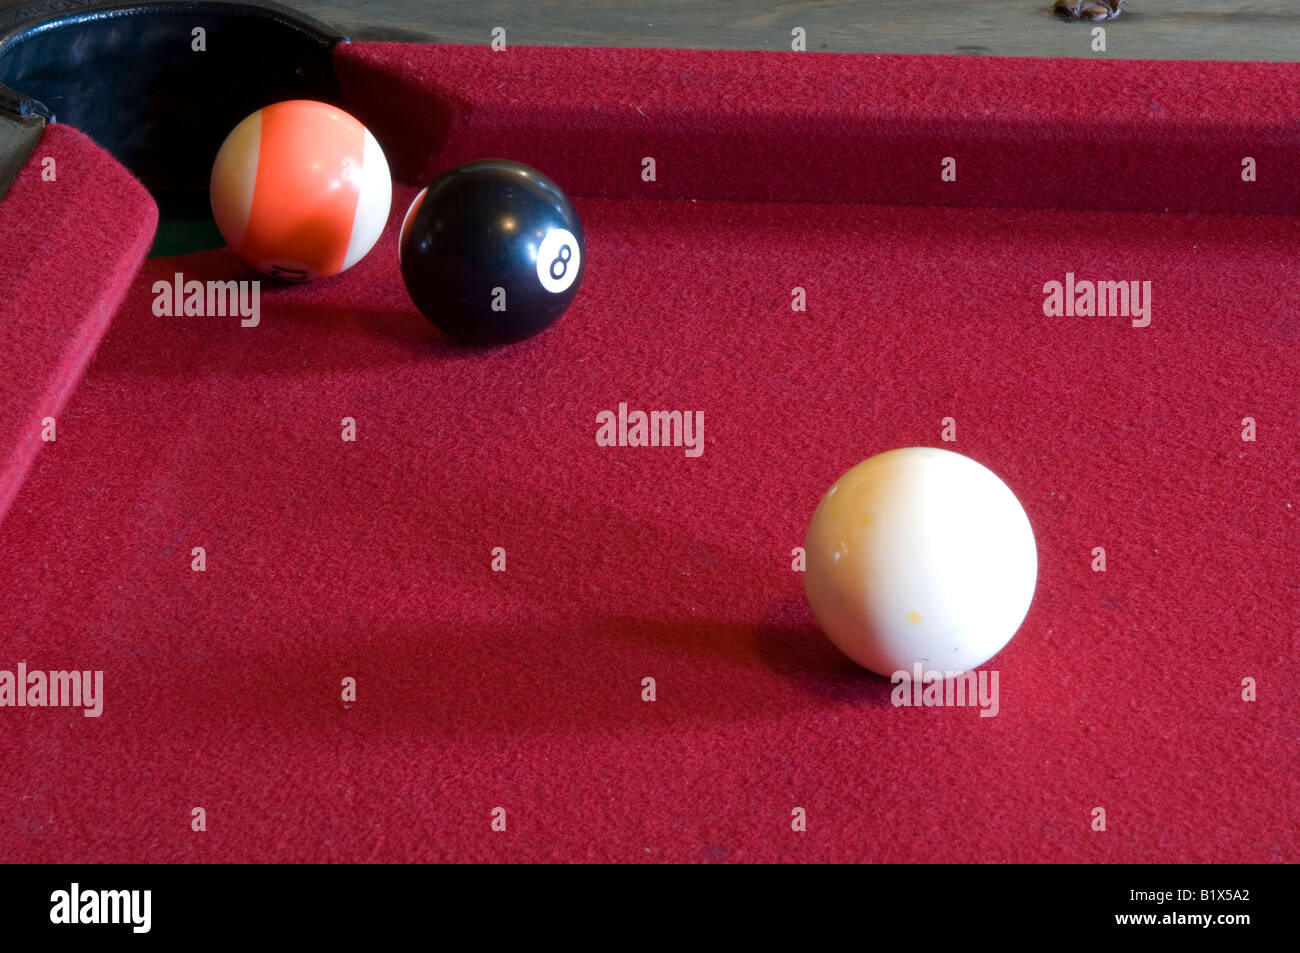 Pool balls on pool table Stock Photo